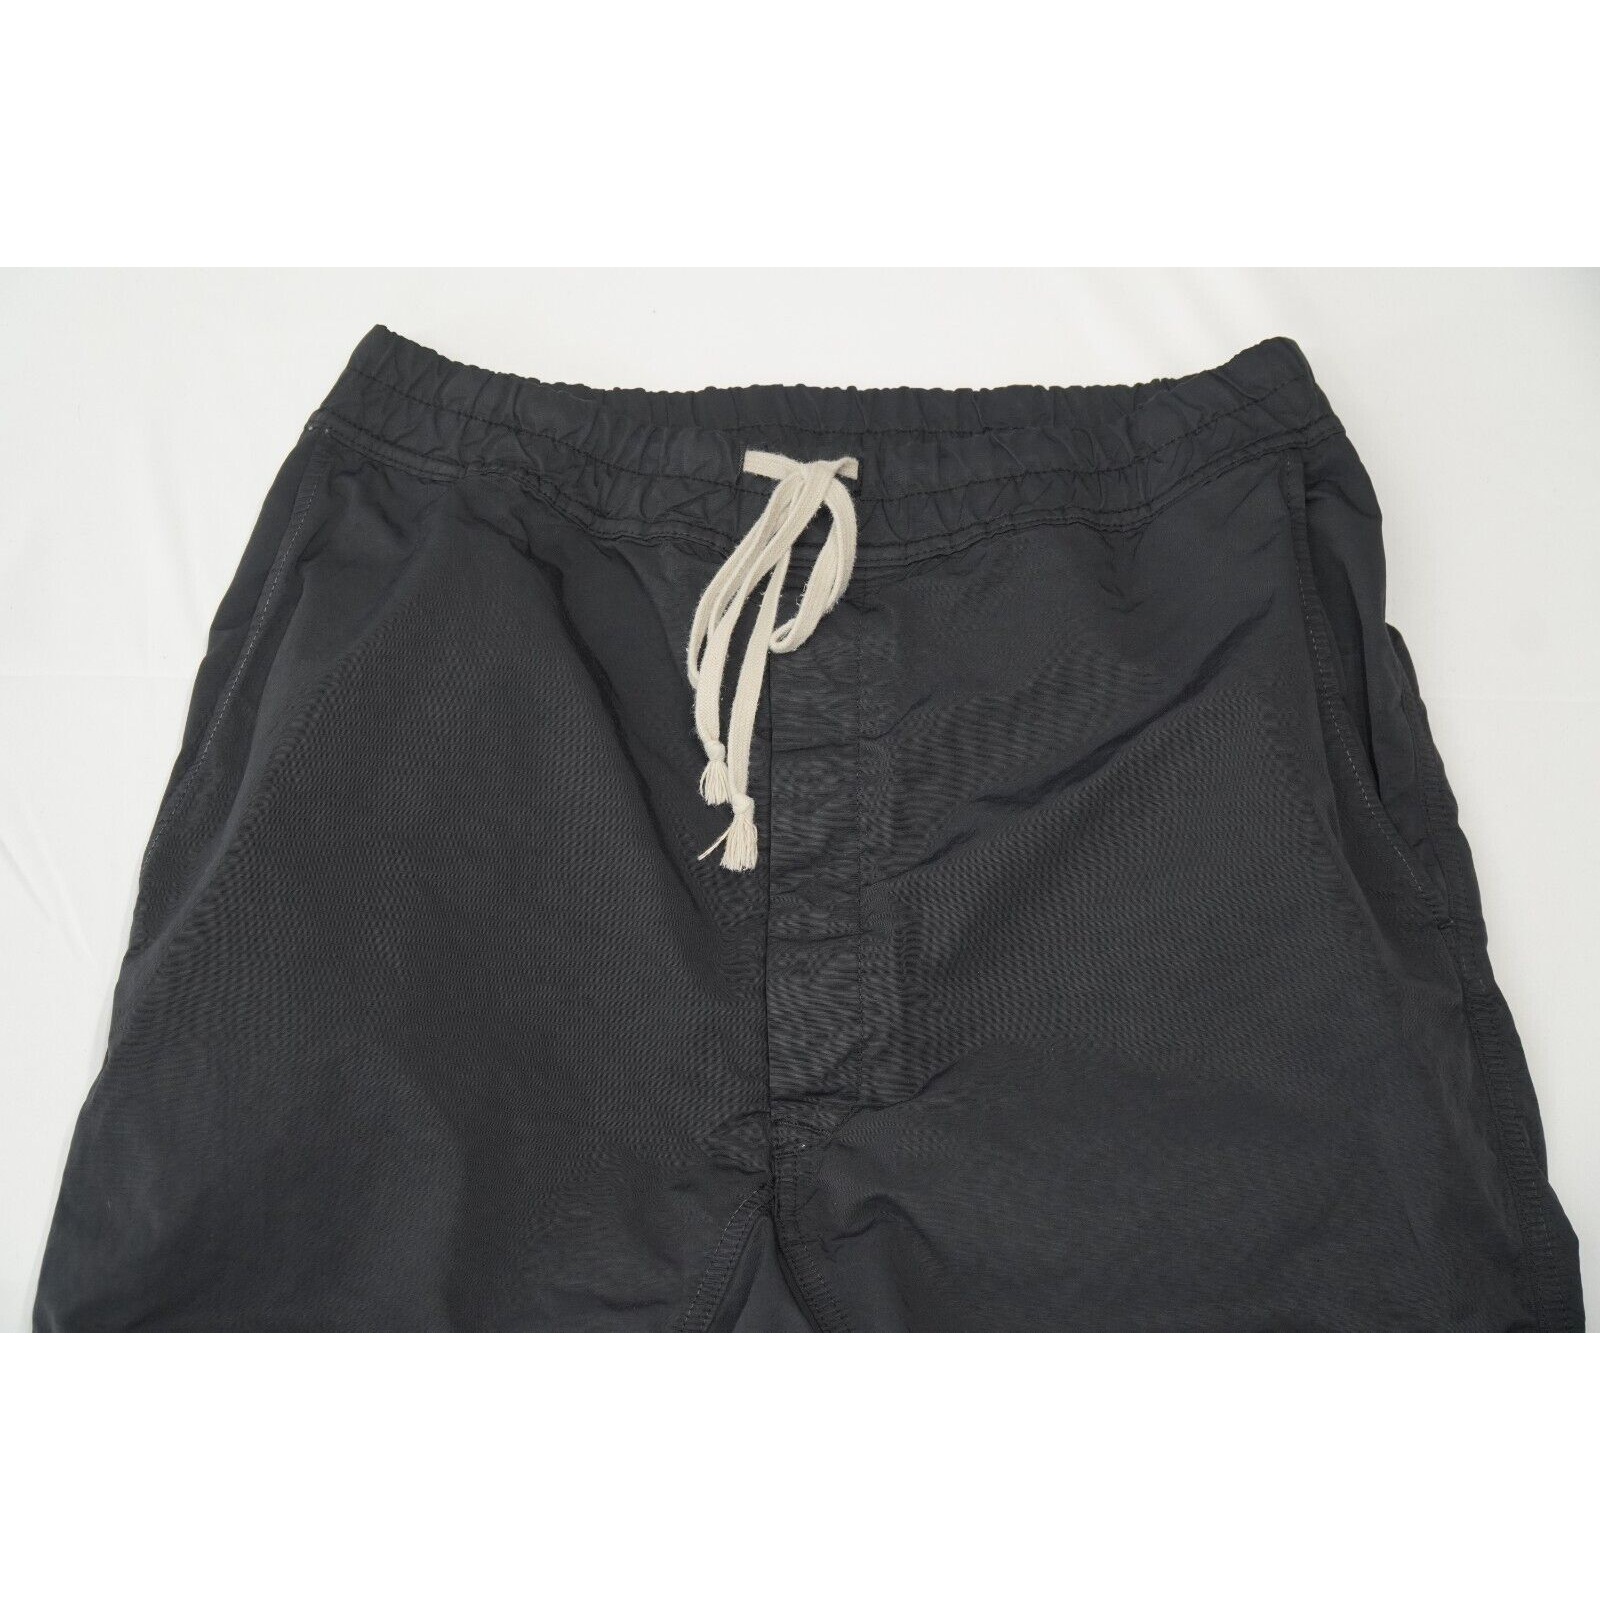 Black Lounge Pants Elastic Drawstring Drop Crotch Large - 2